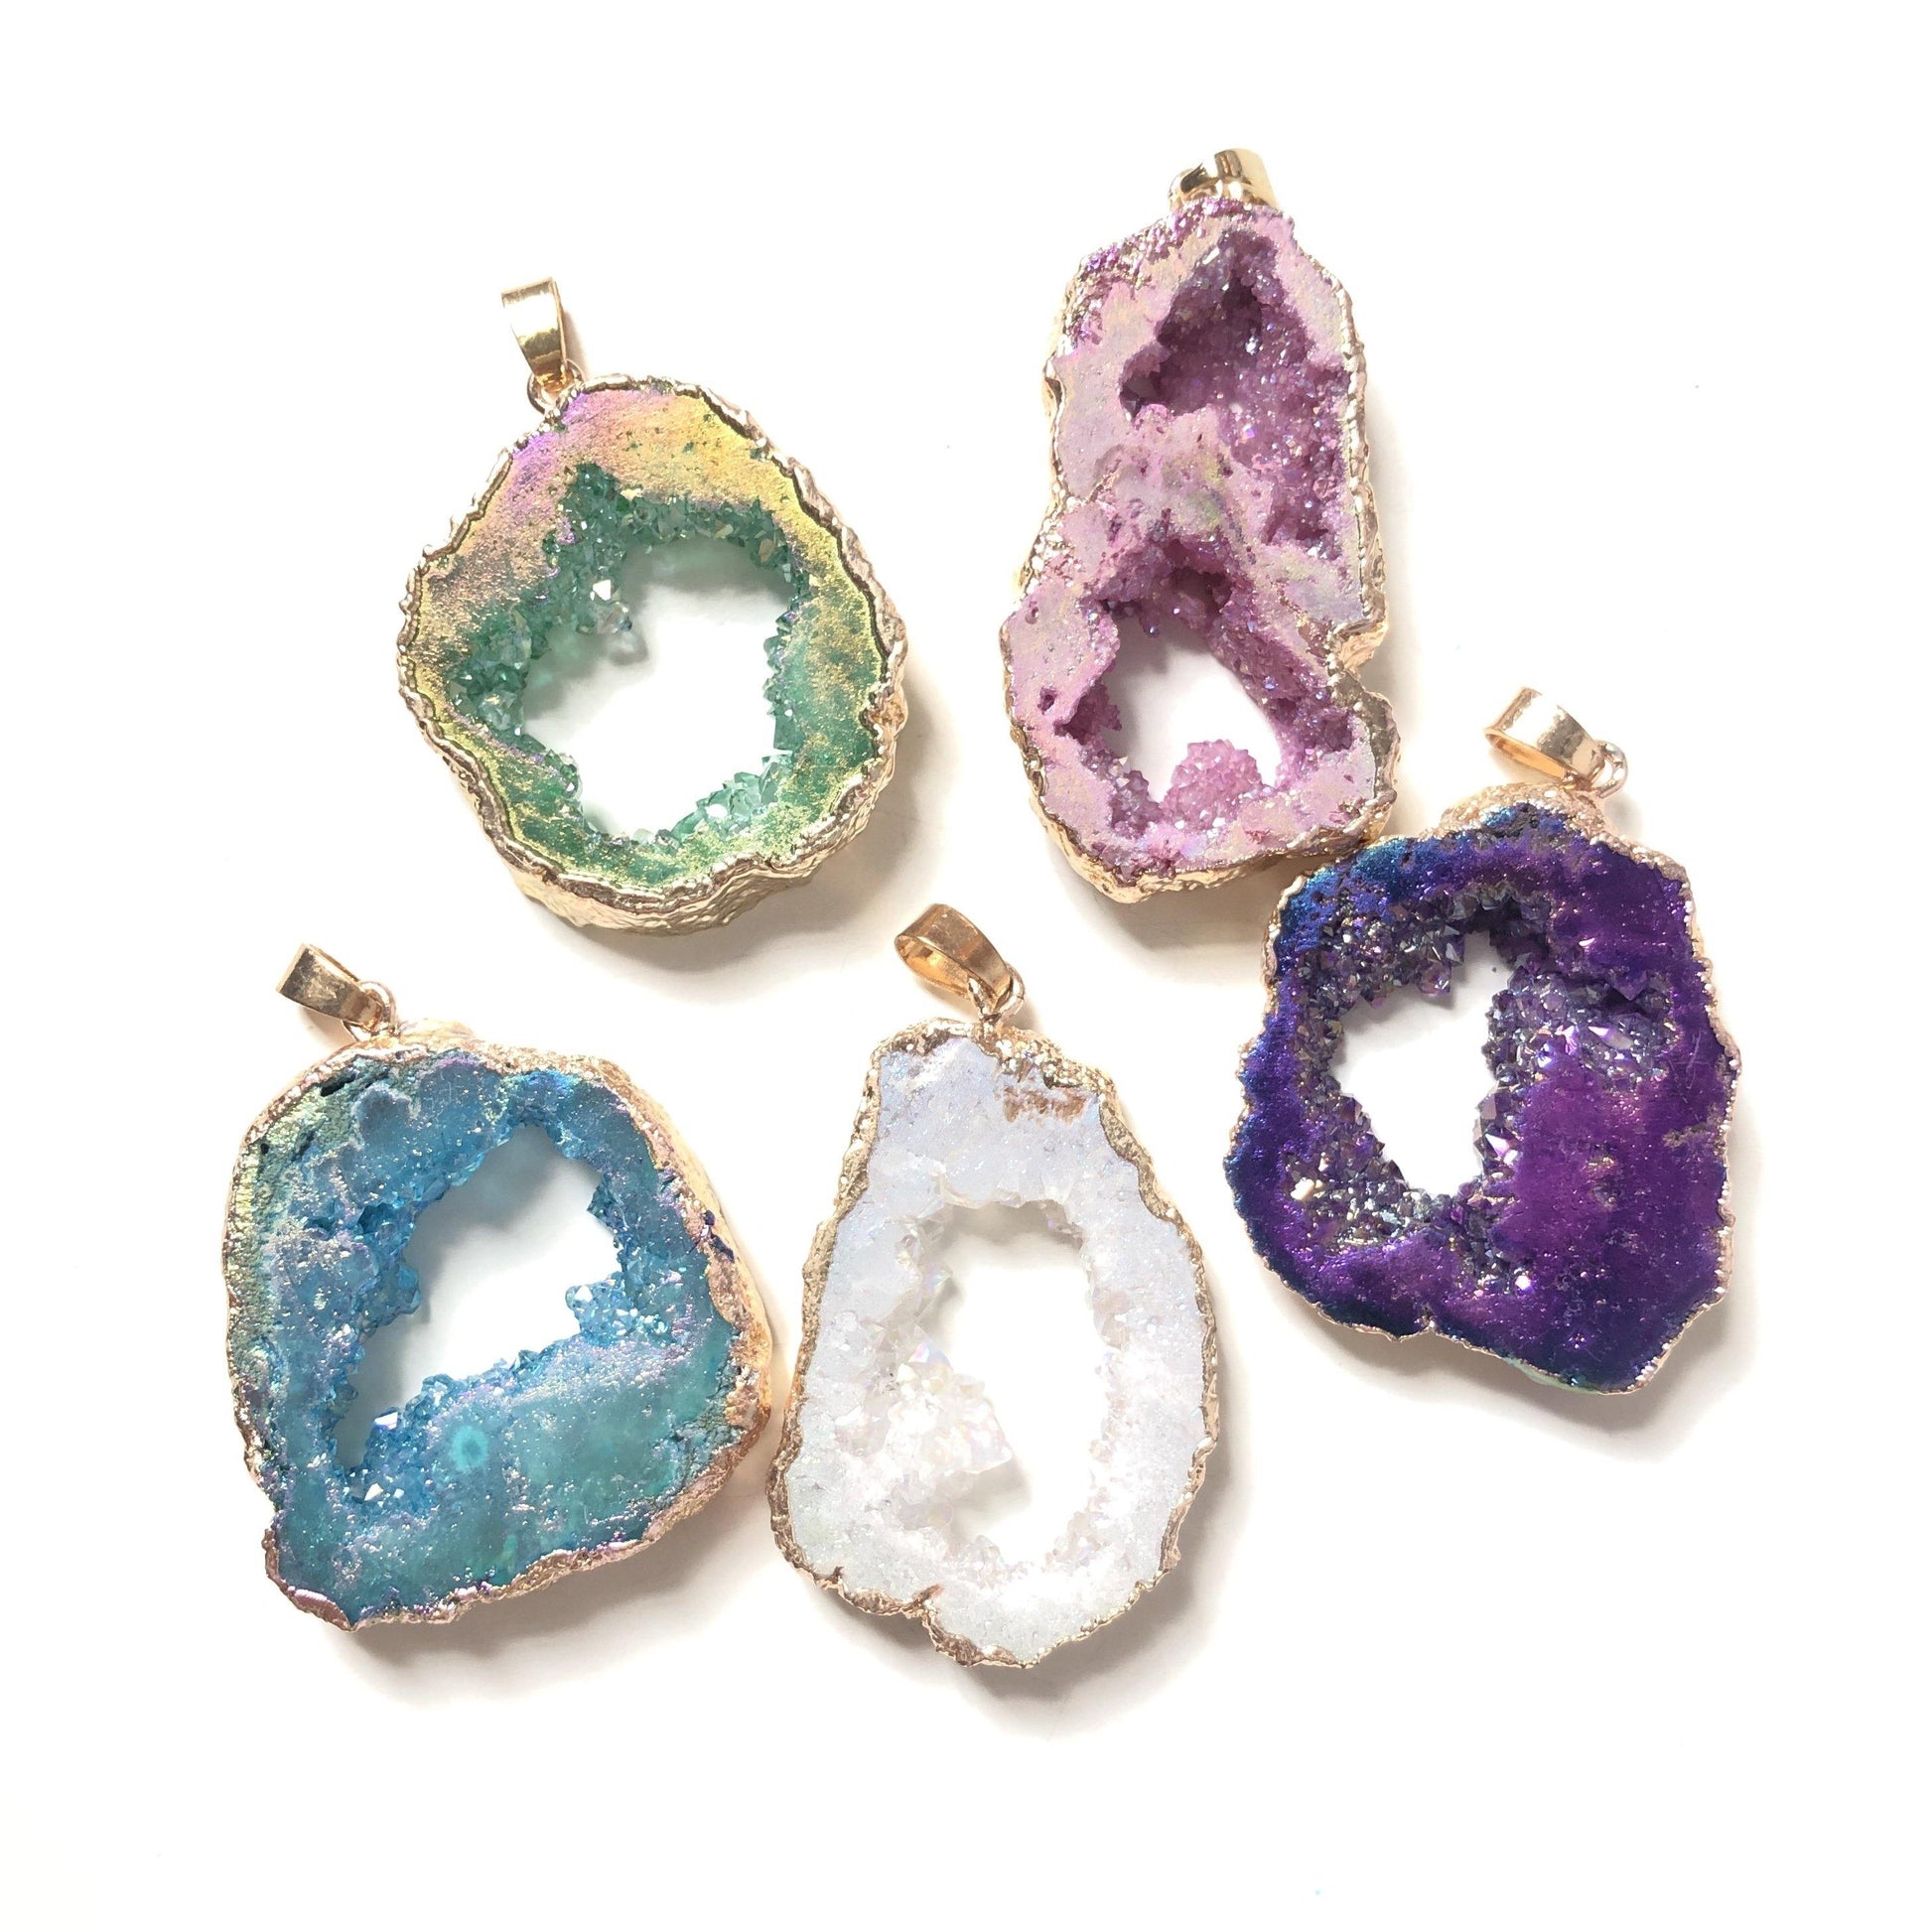 5pcs/lot 30-50mm Natural Agate Druzy Charm Mix Colors (Random) Stone Charms Charms Beads Beyond